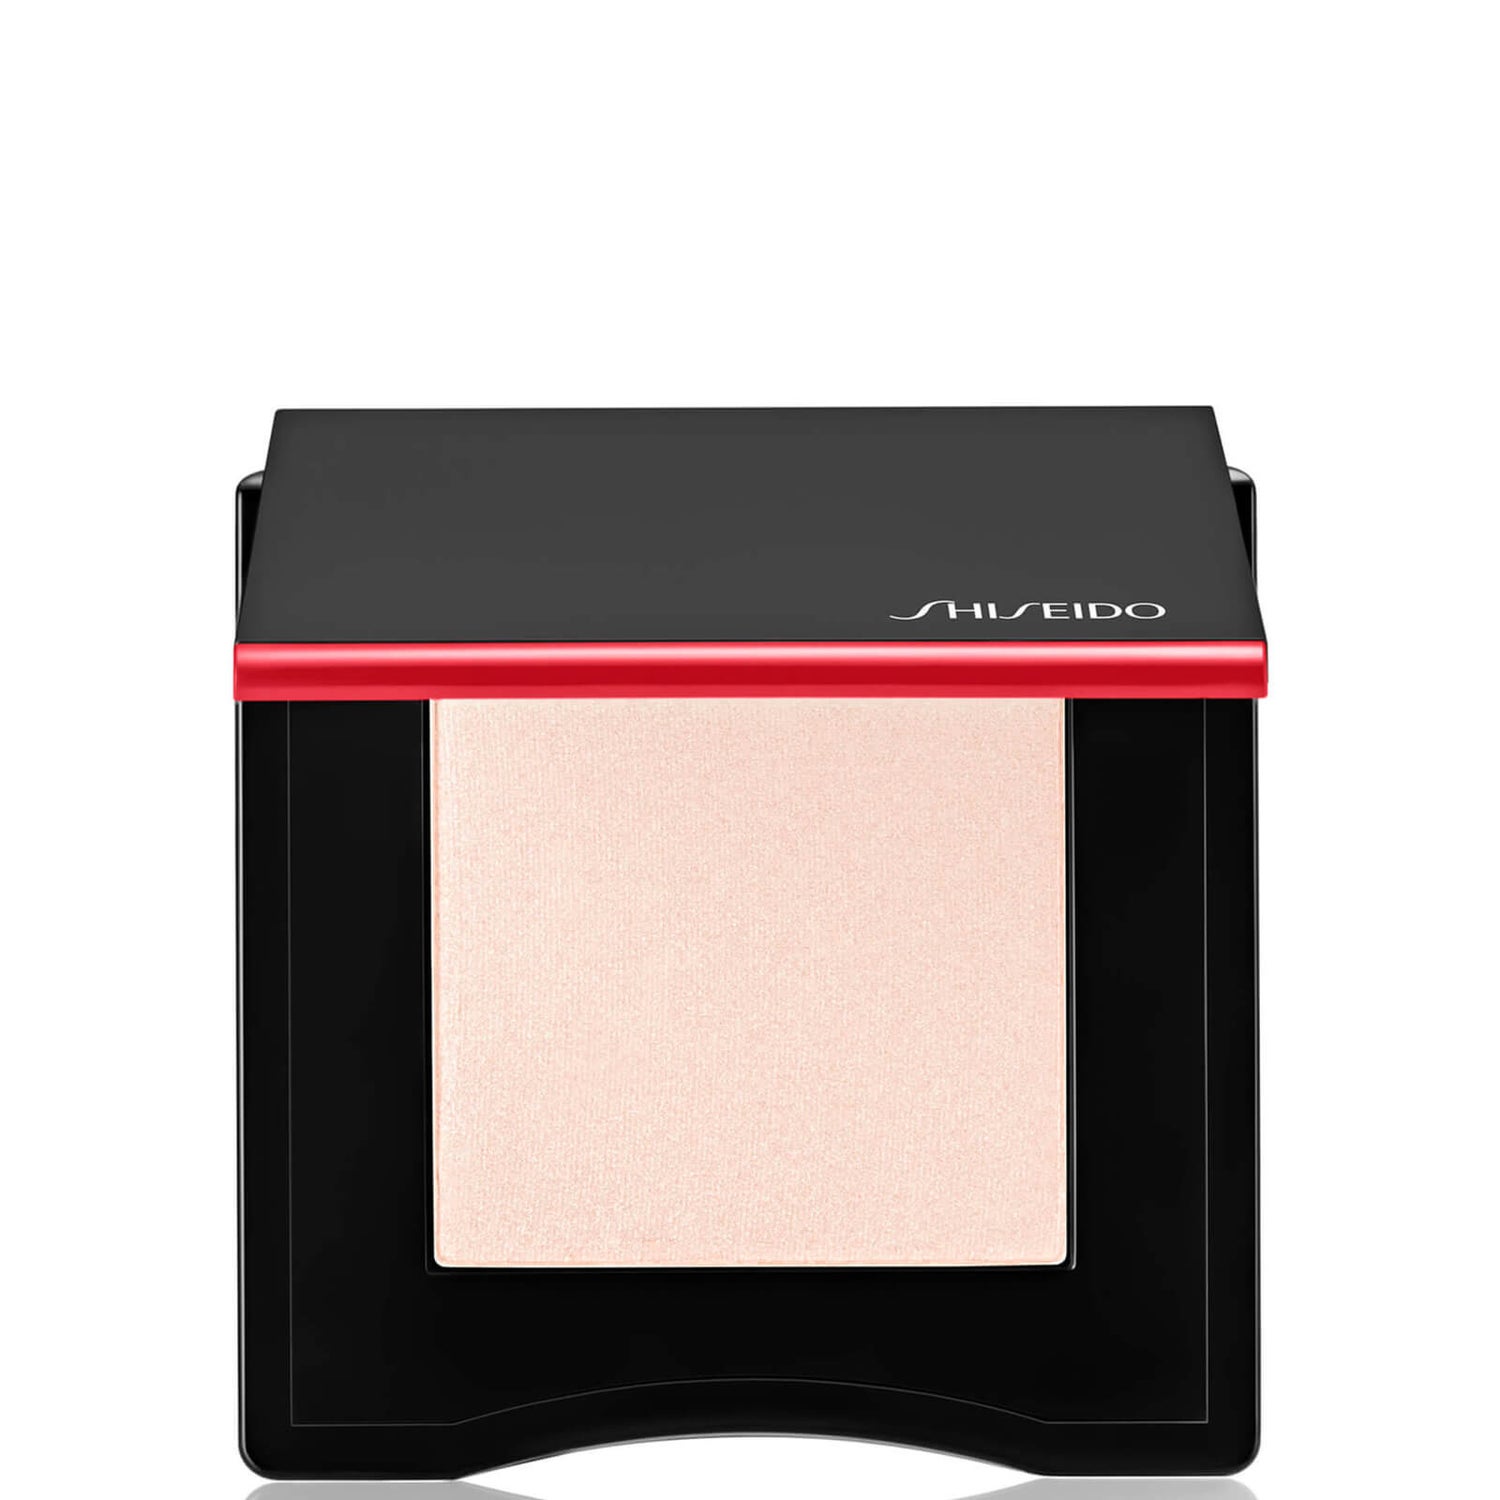 Shiseido Inner Glow Cheek Powder (flere nyanser)